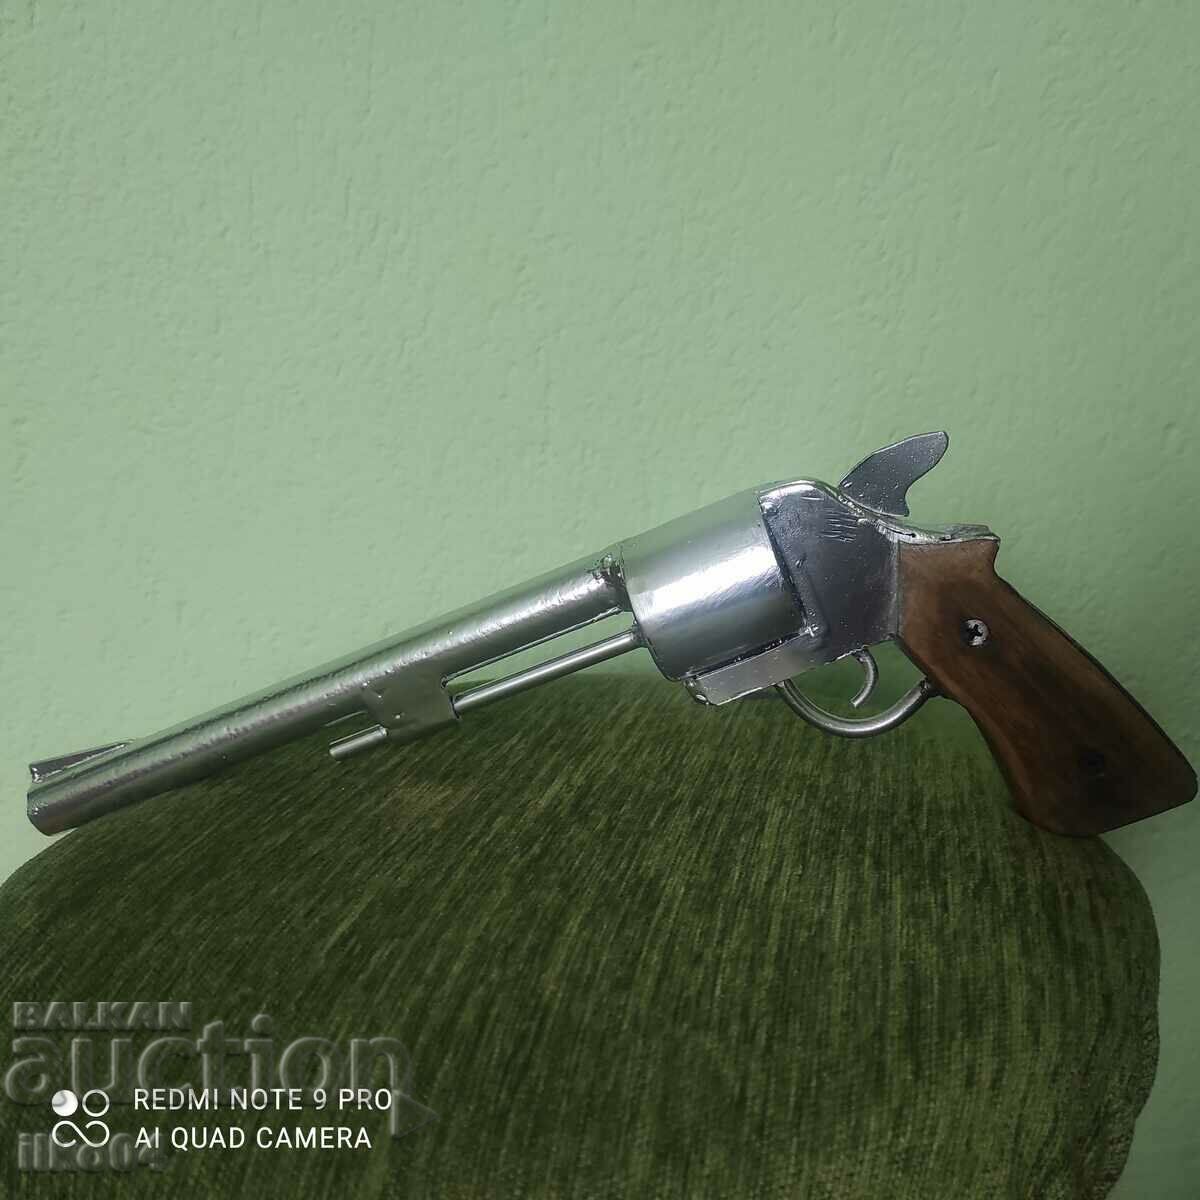 Голям револвер, железен хромиран пистолет- Реплика